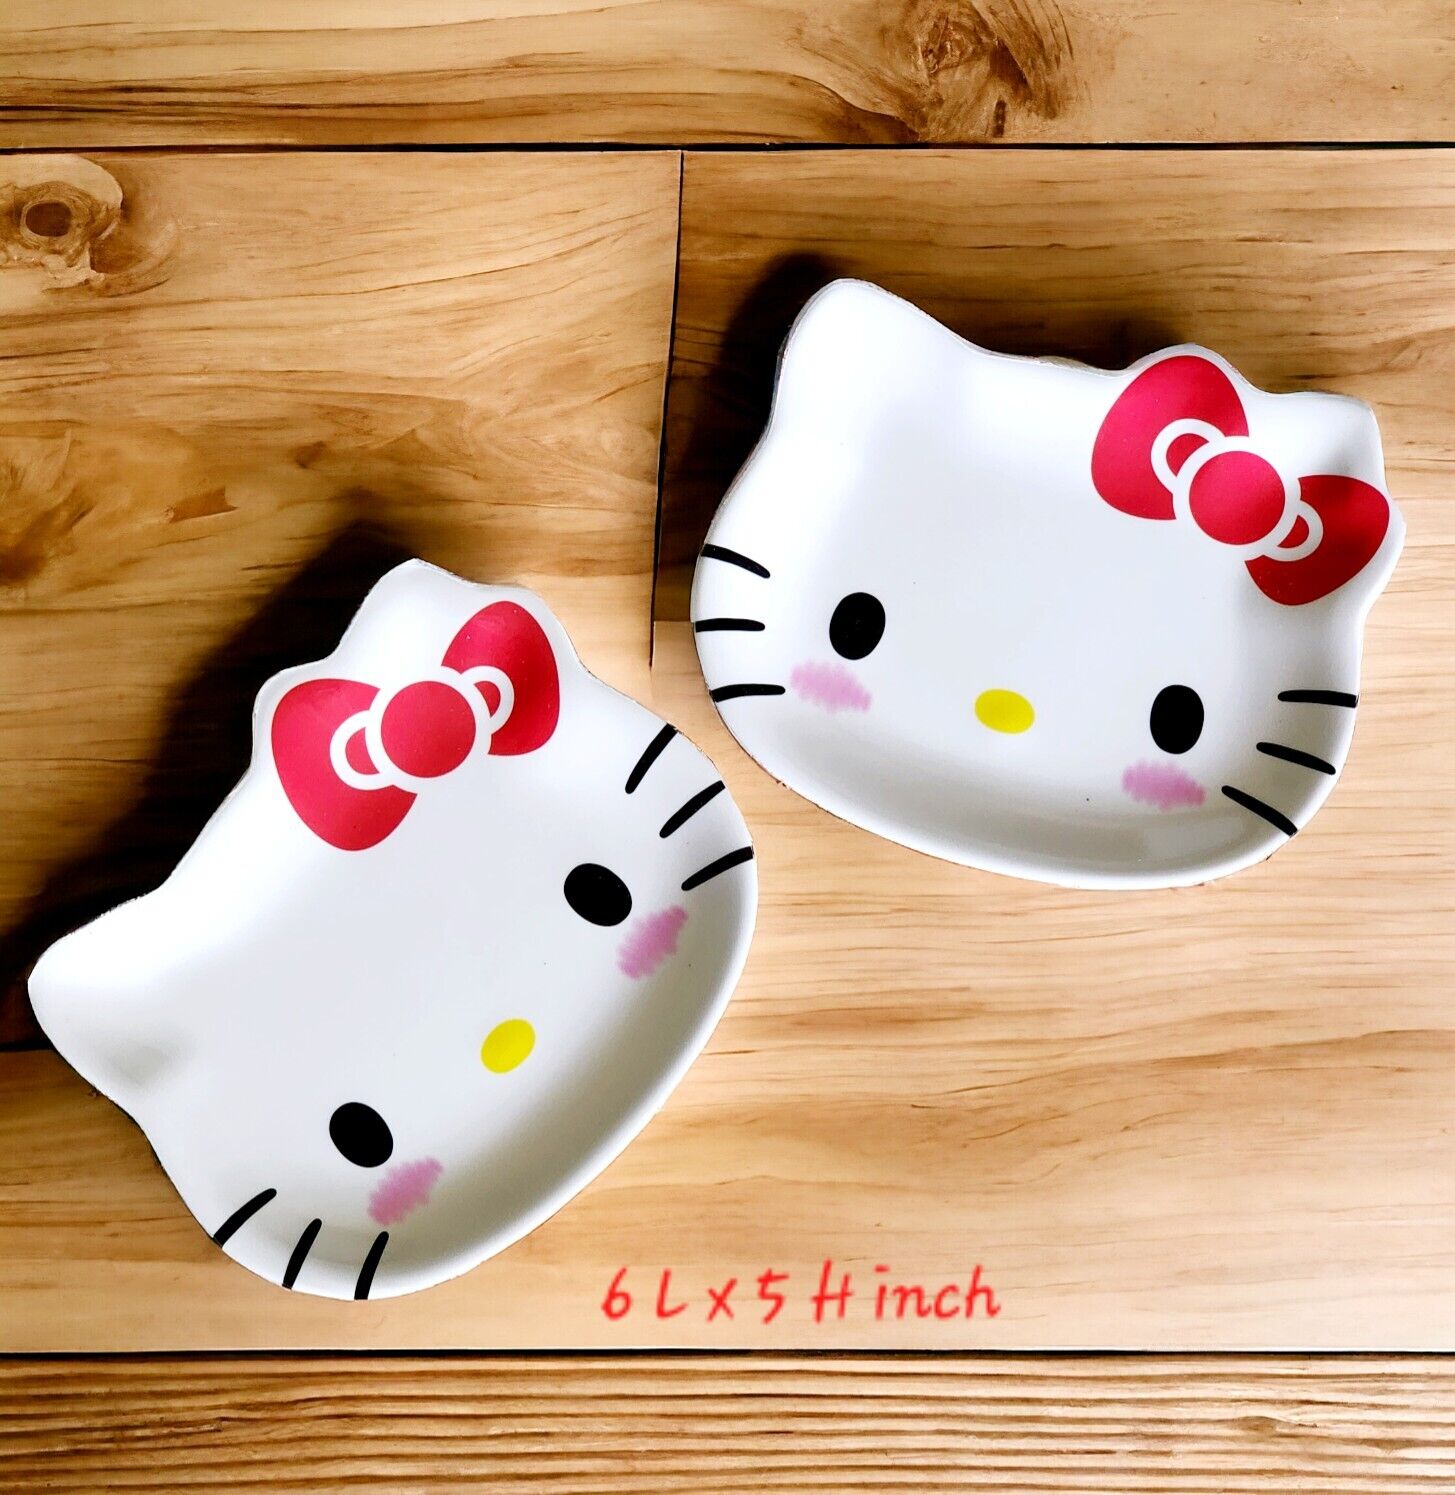 2 x Lovely Cartoon Hello Kitty  Plastic Snacks Plate, Great For Kids